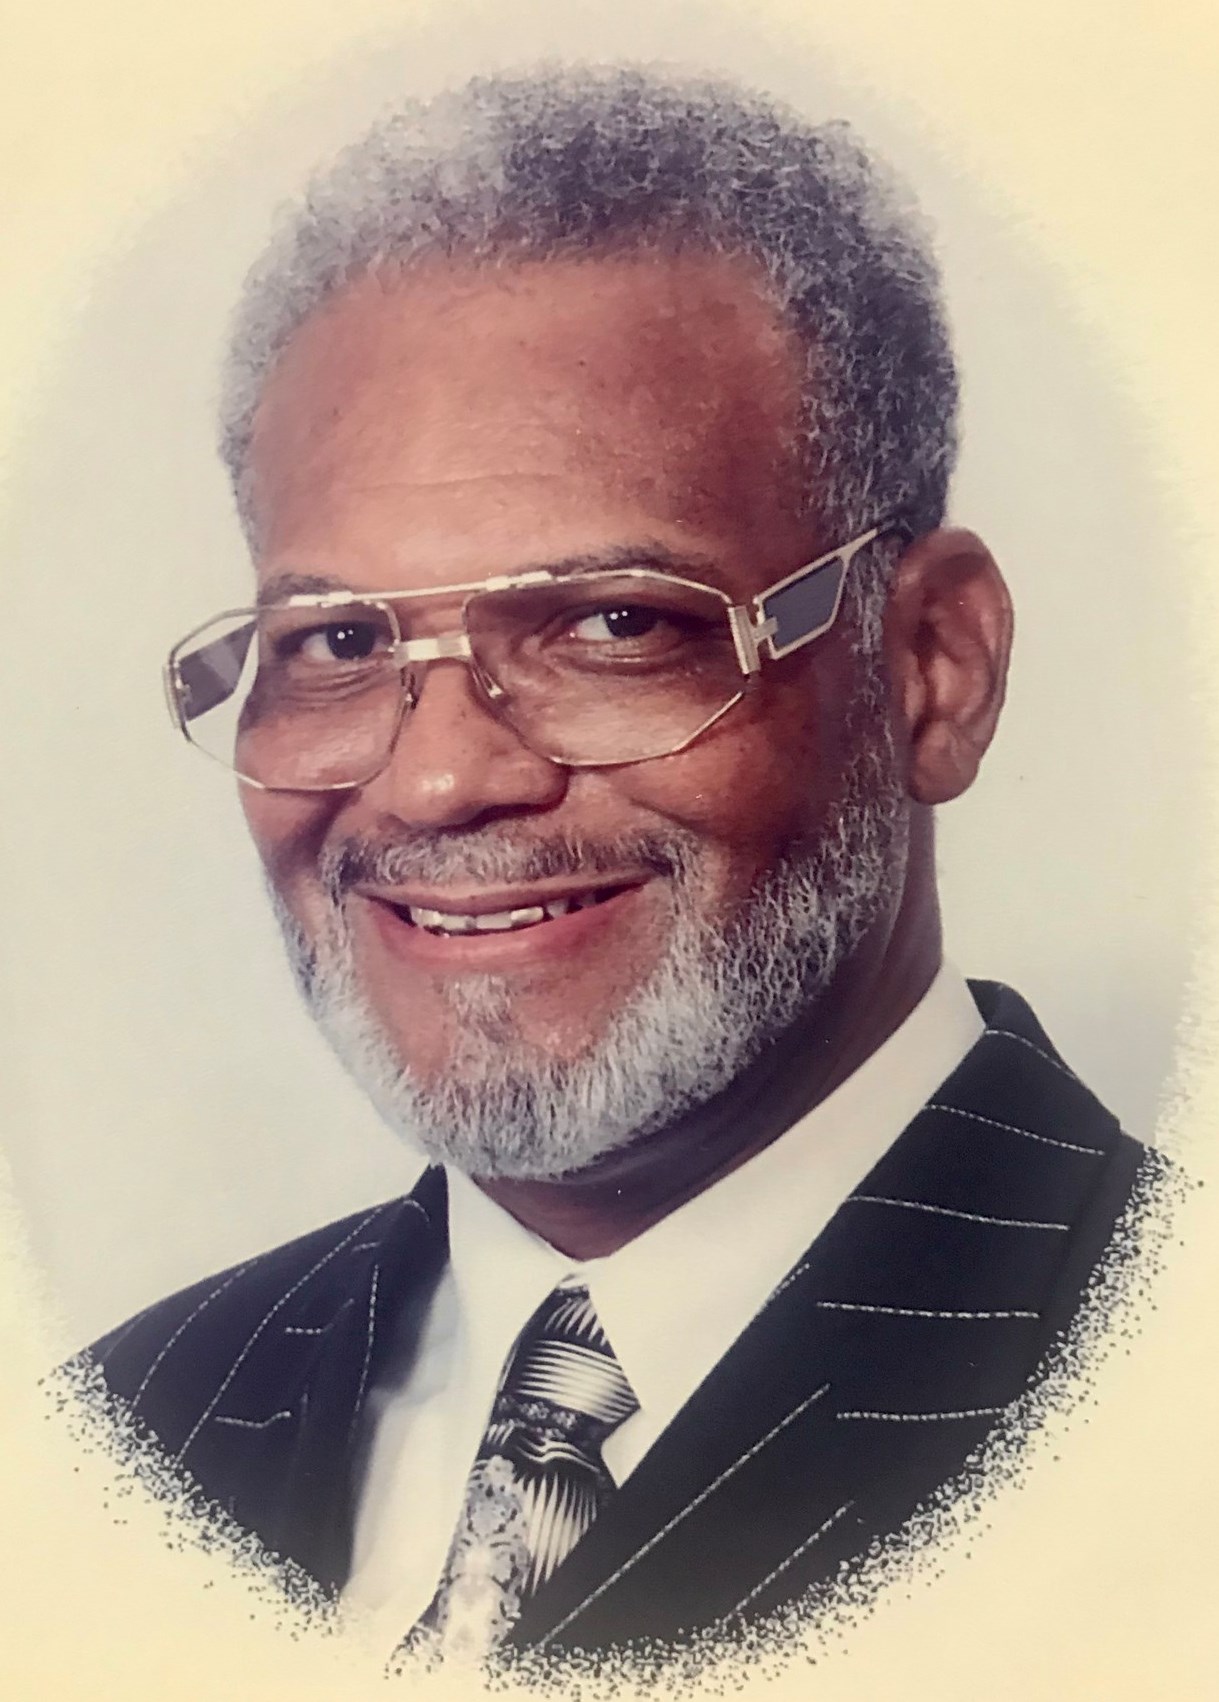 Mr. Isaiah Thomas Mitchell Obituary - Visitation & Funeral Information